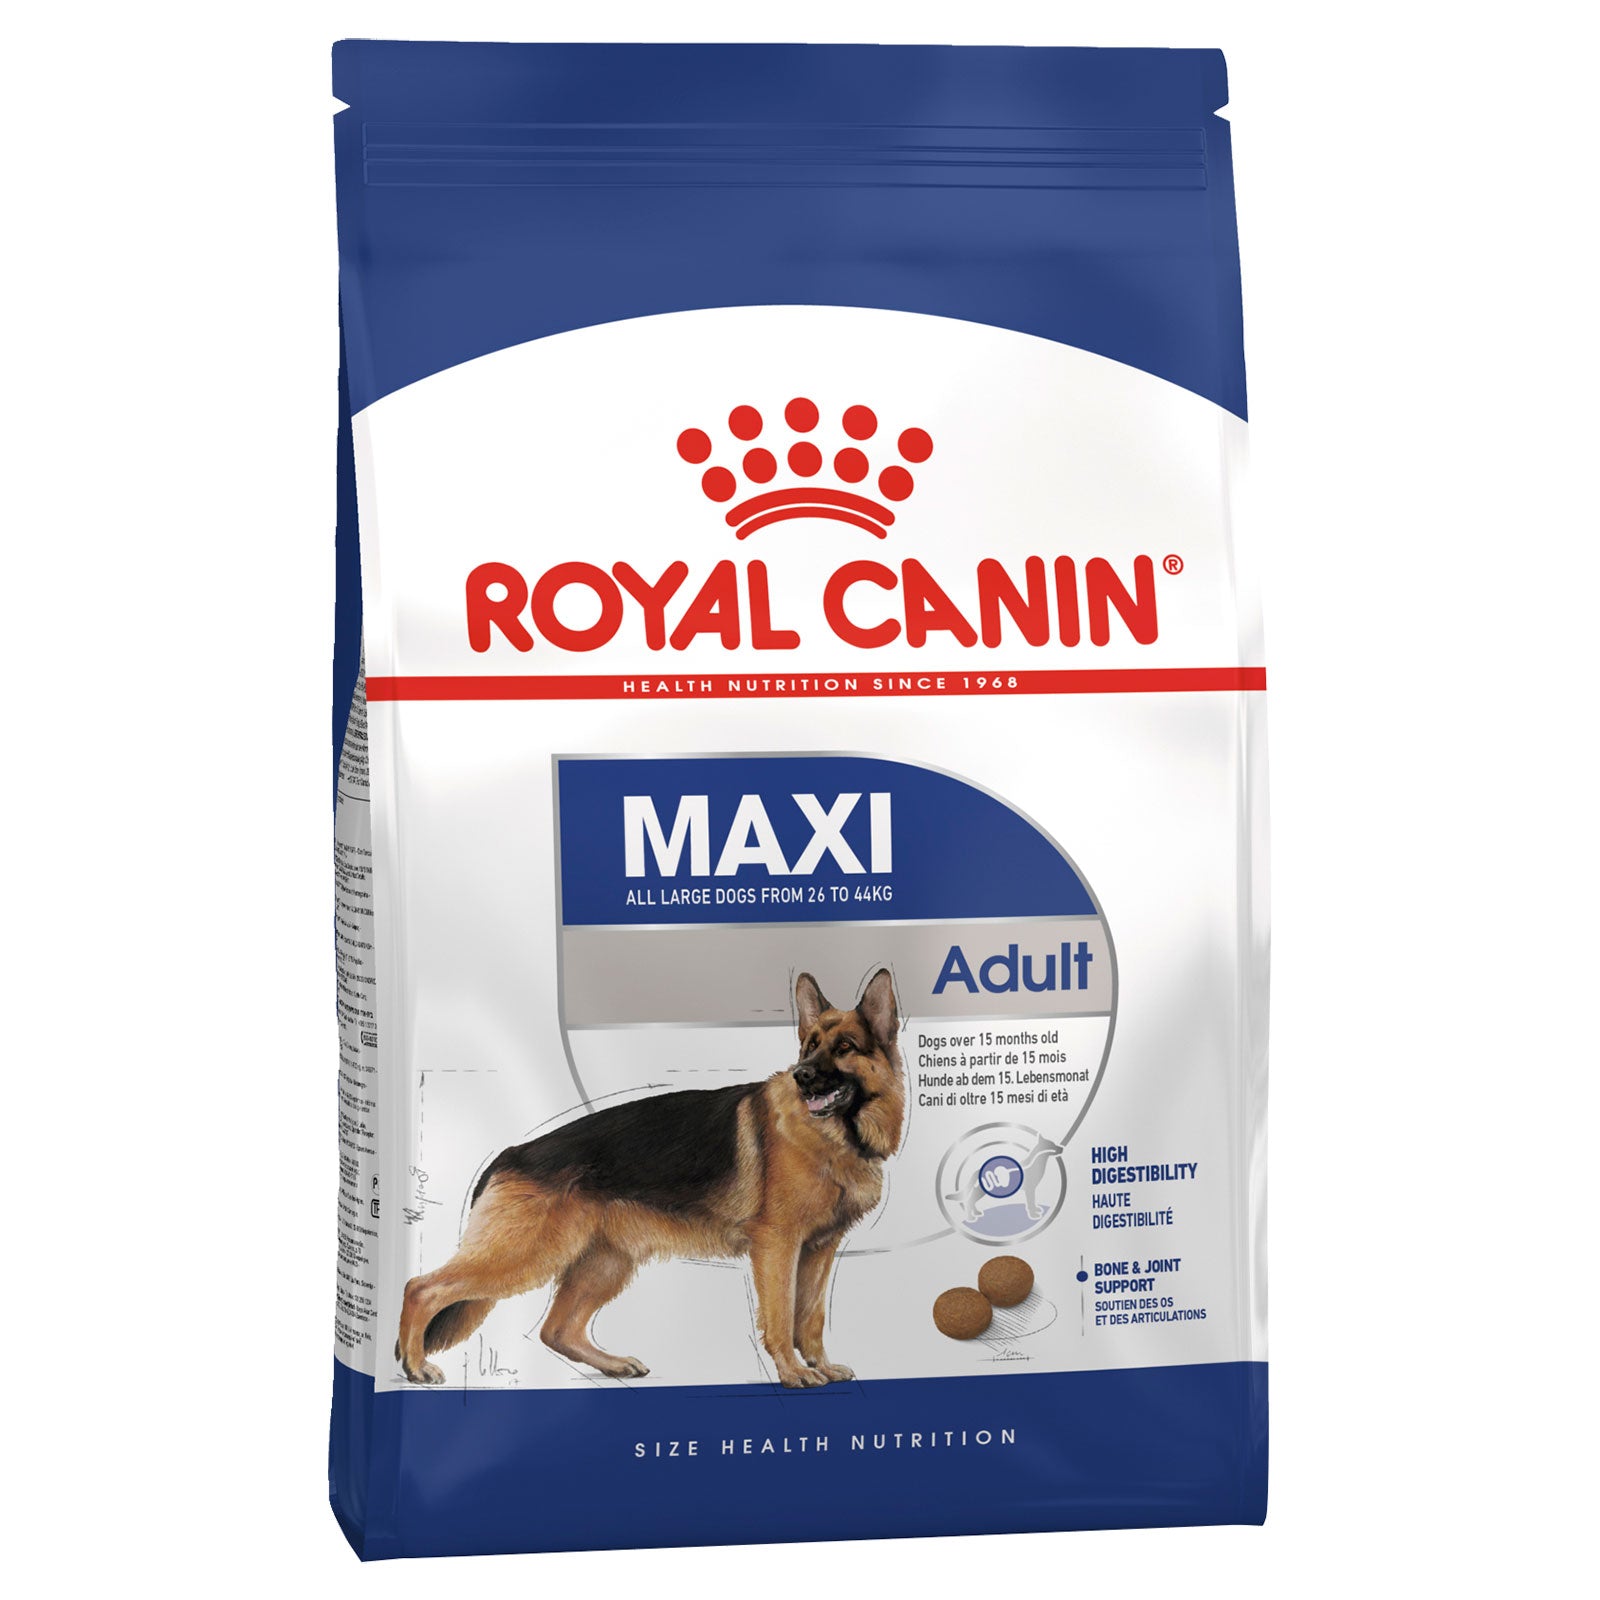 Royal Canin Dog Food Adult Maxi